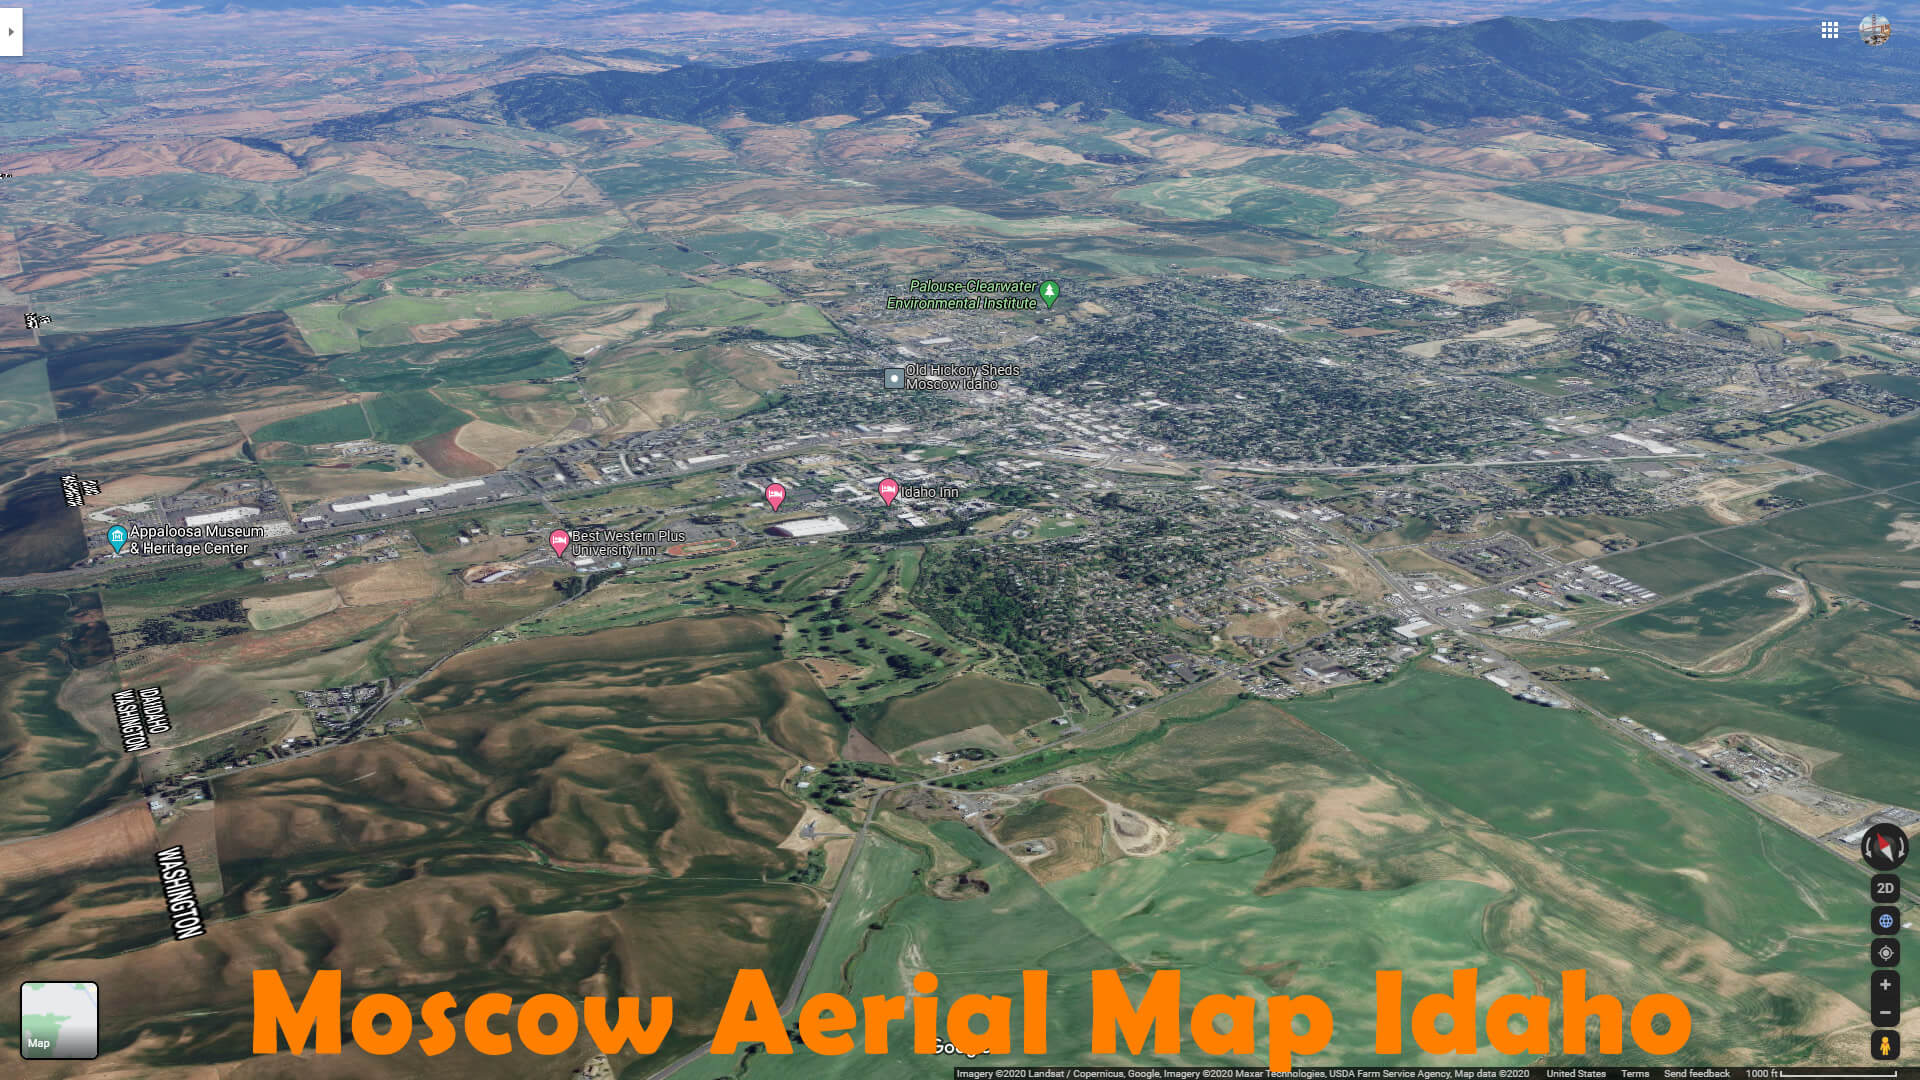 Moscow Aerial Map Idaho